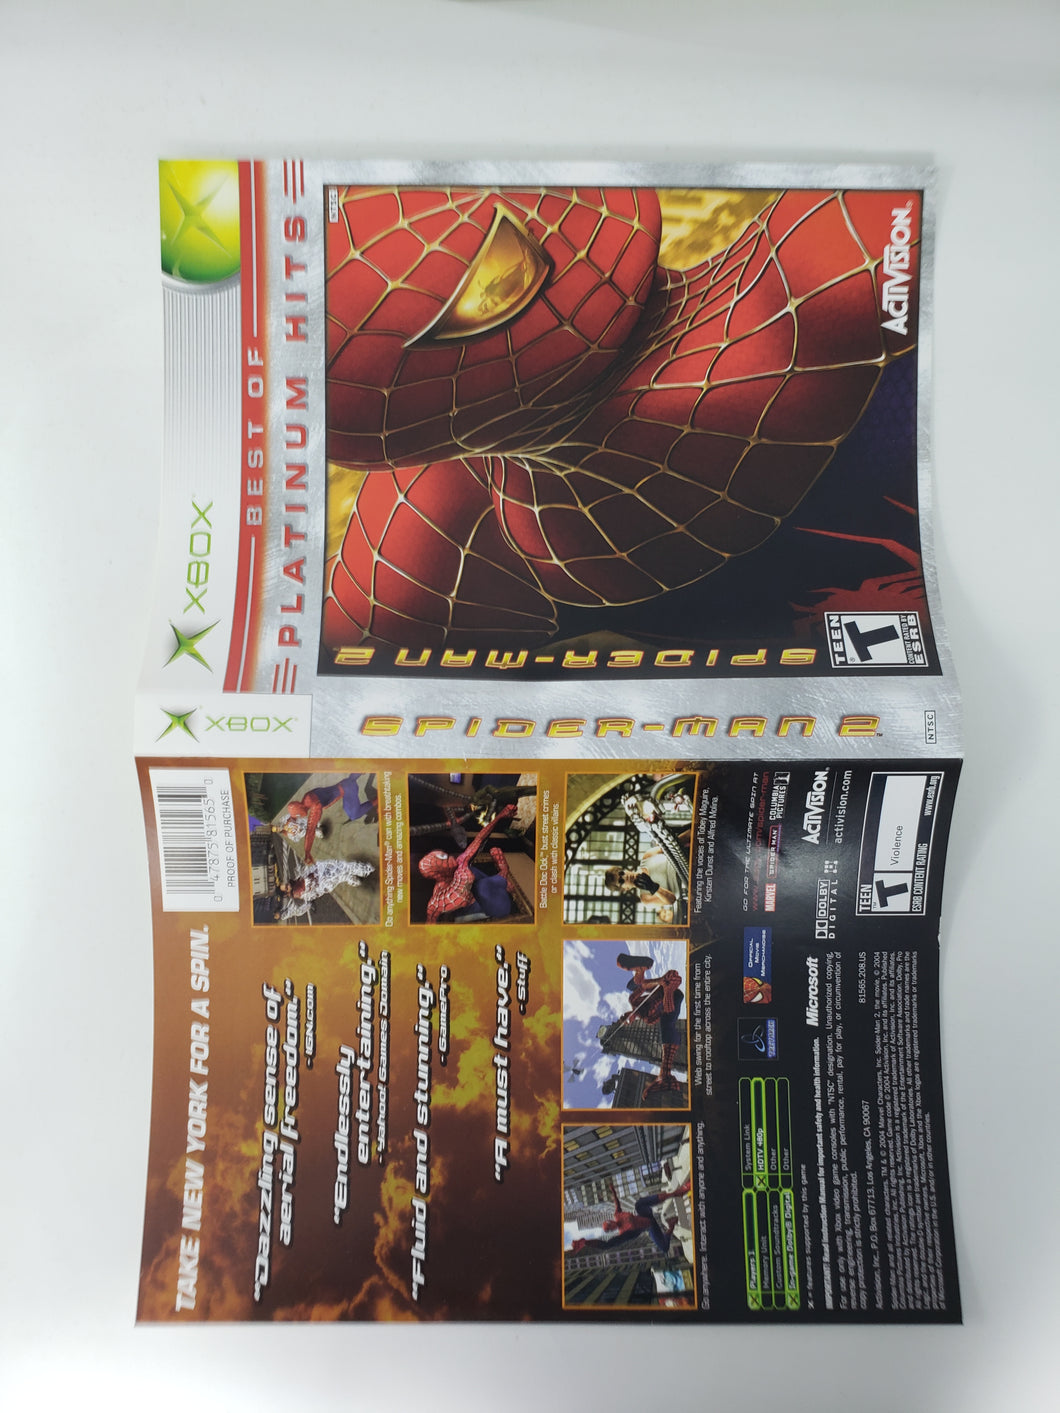 Spiderman 2 Platinum Hits [Cover art] - Microsoft Xbox